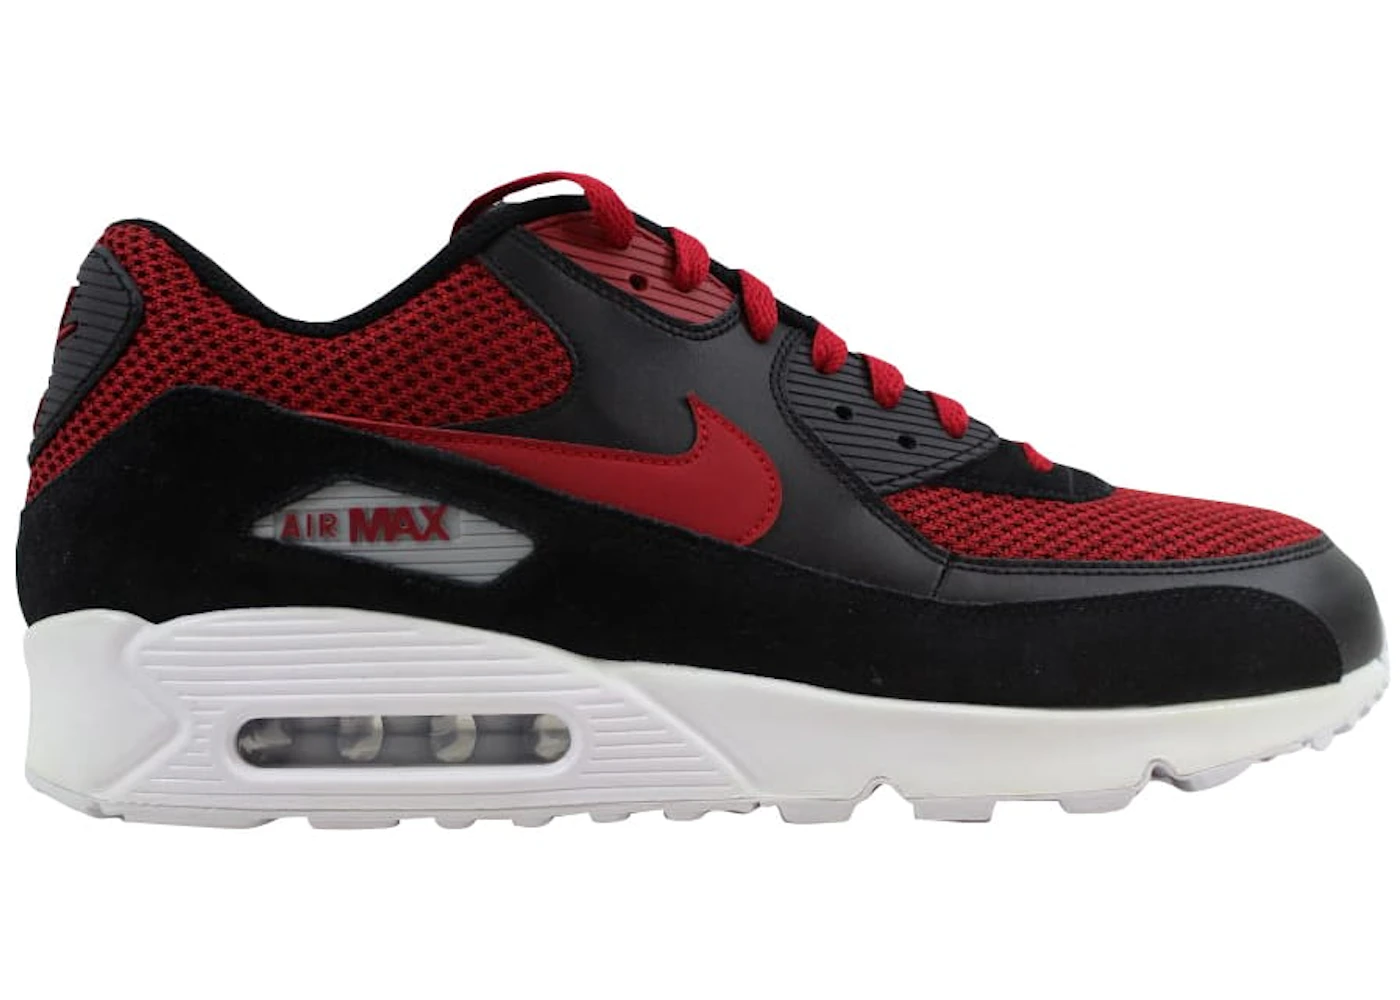 Nike Air Max 90 Essential Black/Tough Red-Tough Red Men's - 537384-076 - US